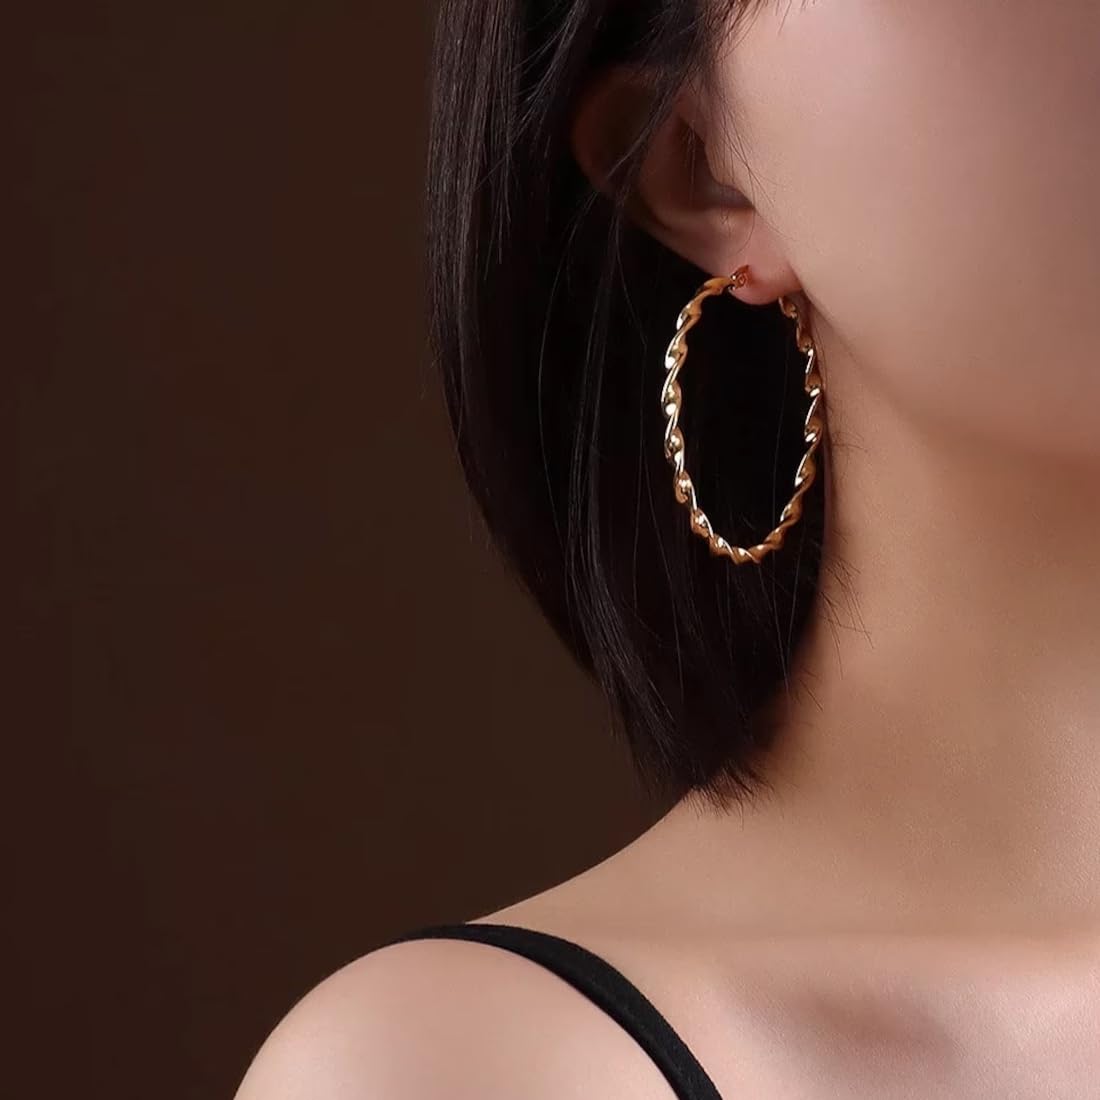 Jewels Galaxy Gold Plated Hoops Earrings Combo For Women/Girls